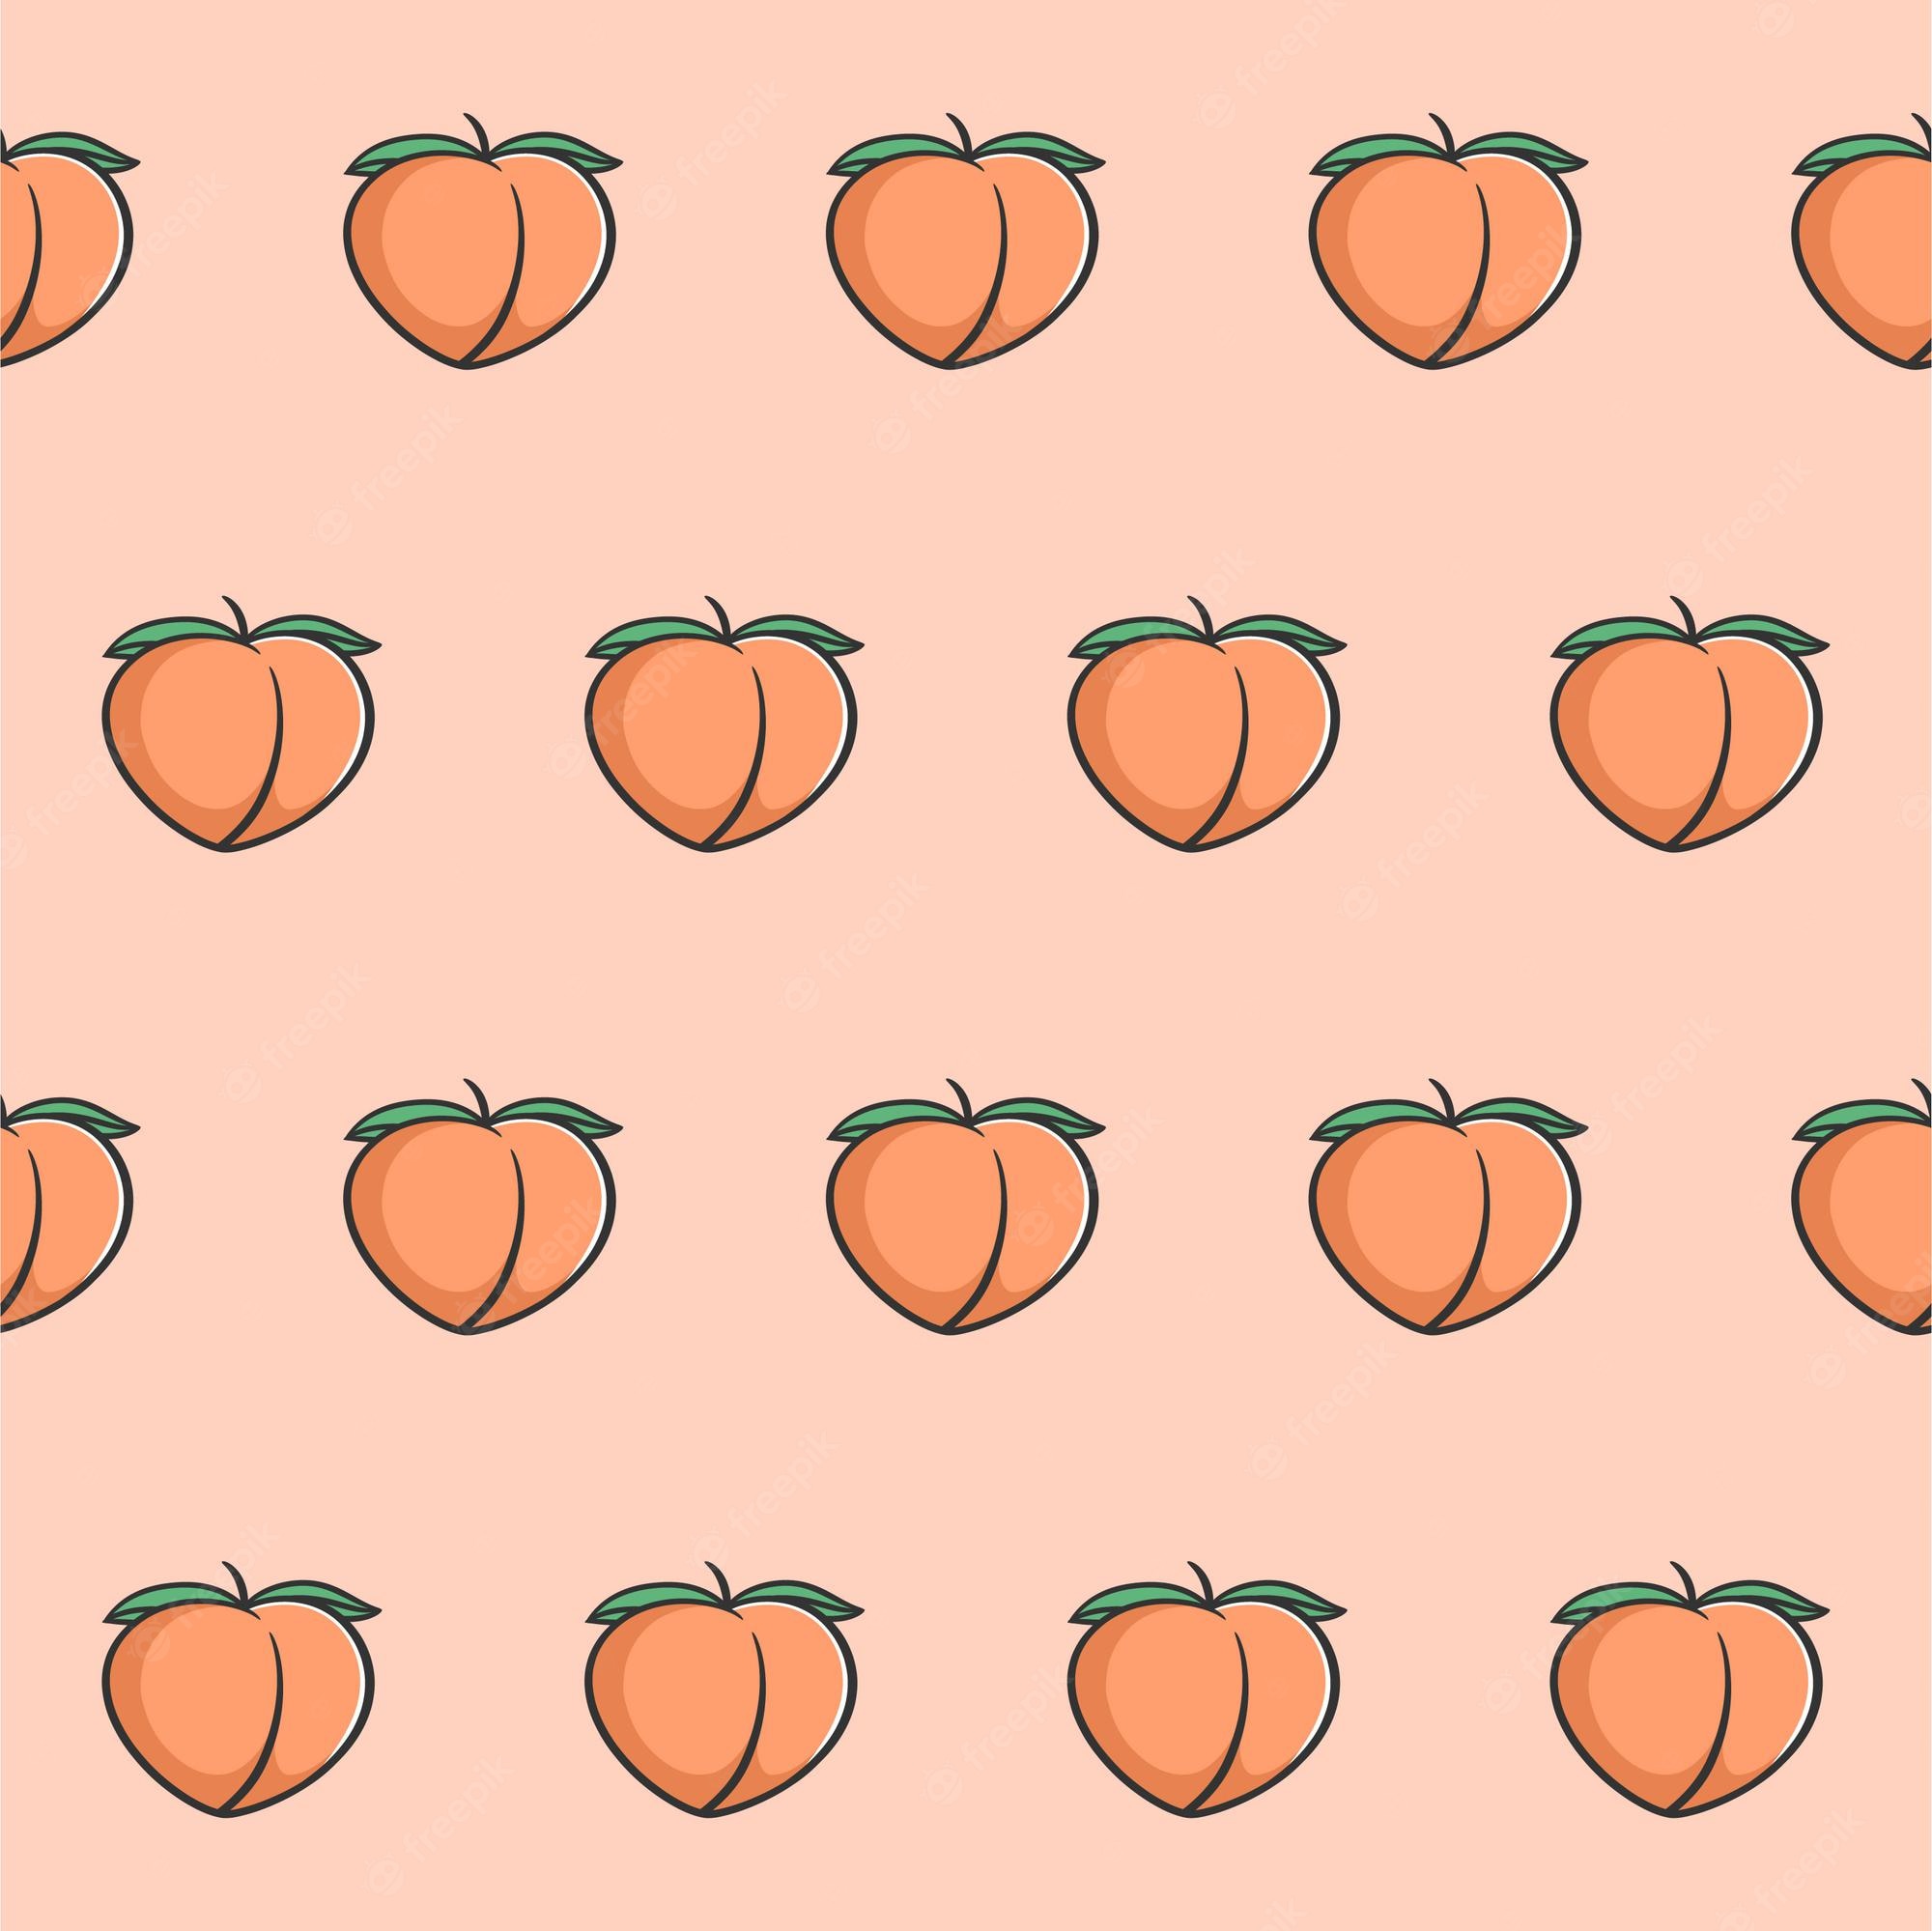 Peach Emoji Wallpapers